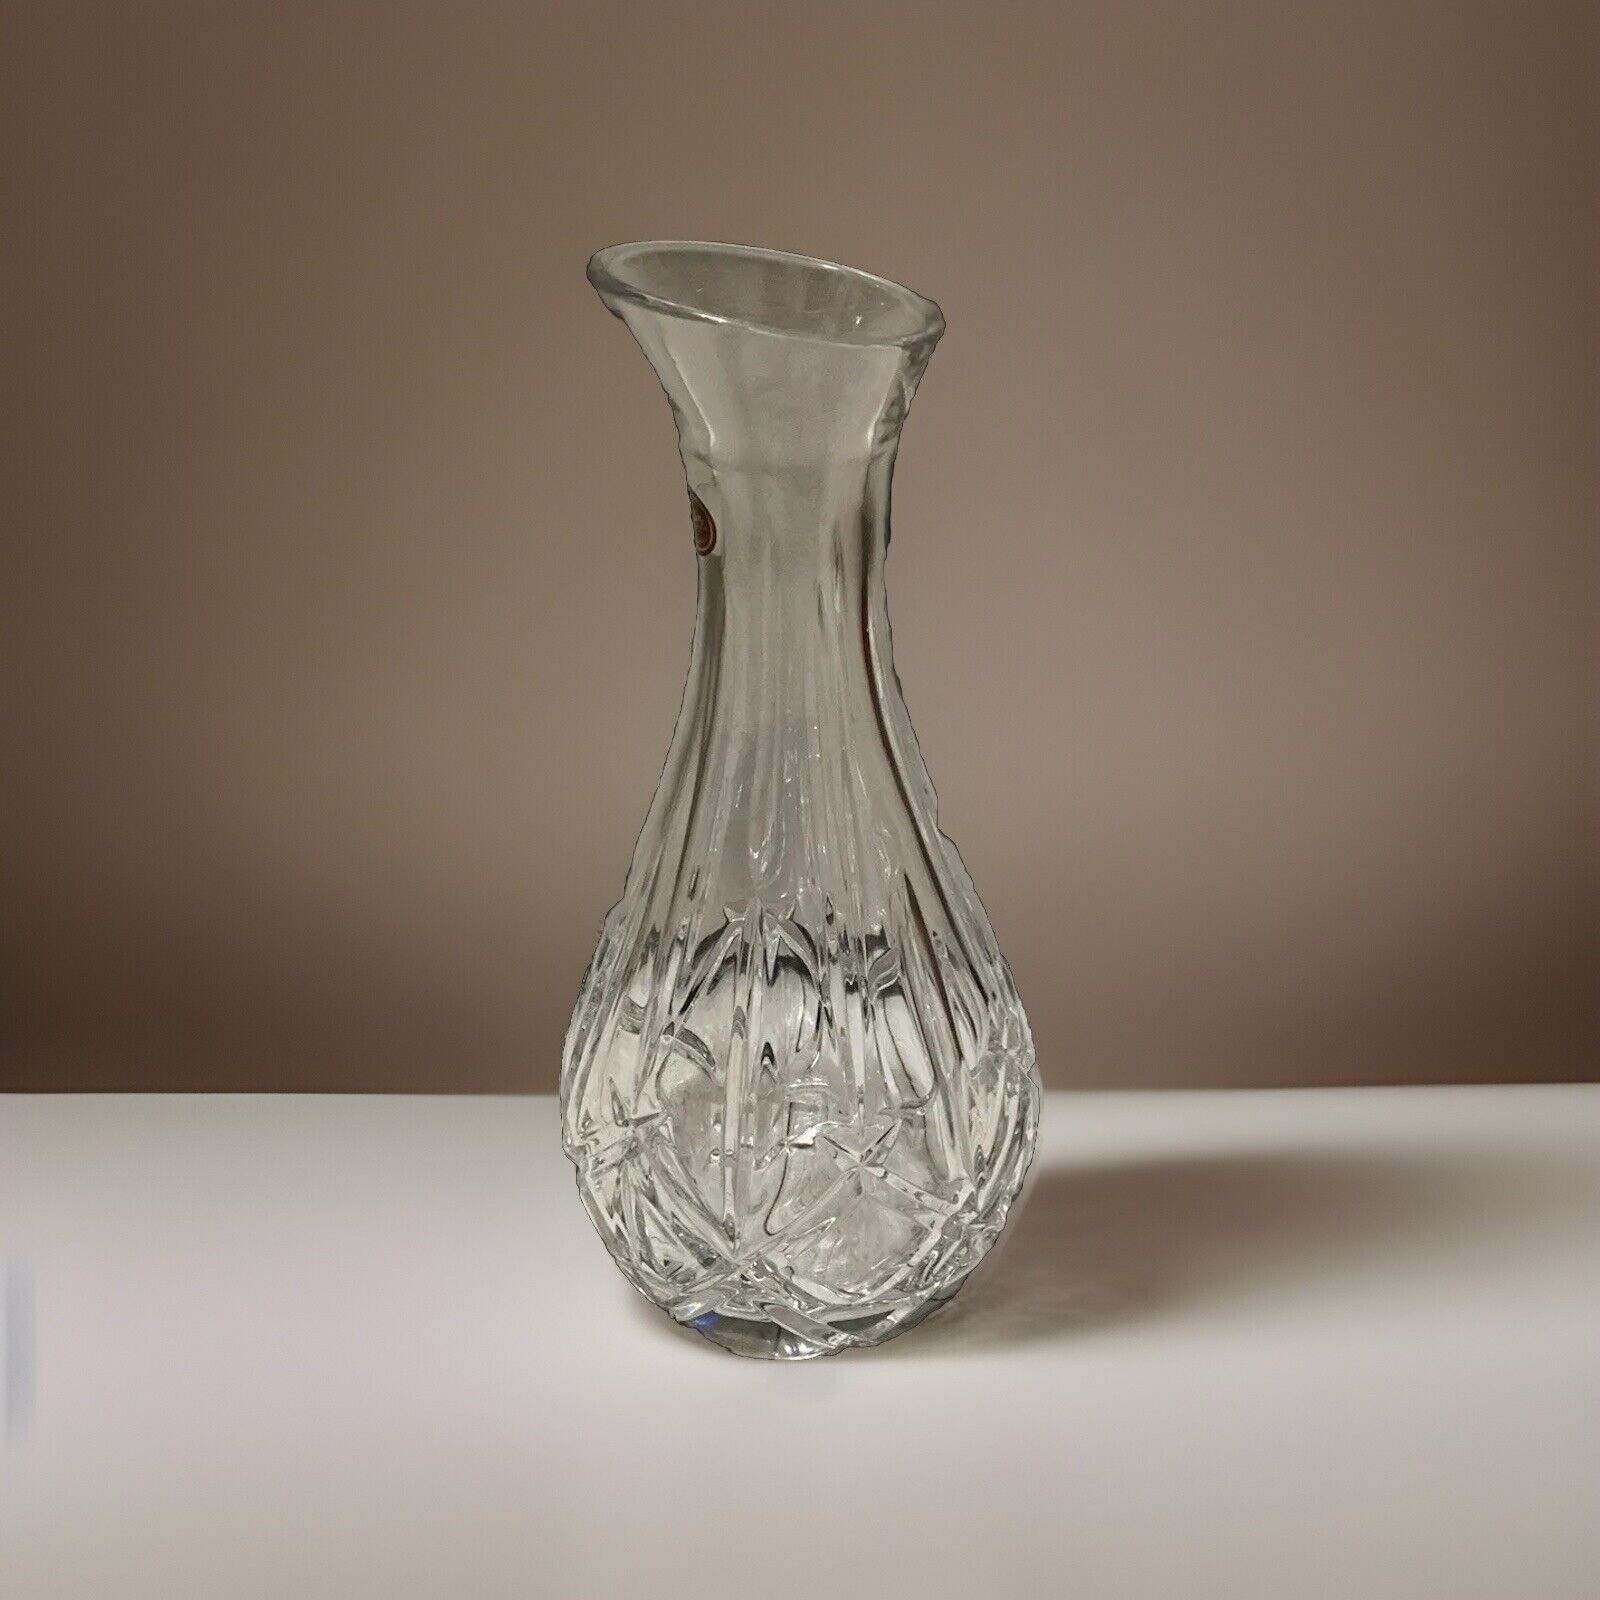 Vintage Gorham Crystal Carafe - Lady Anne Design - Fine Crystal Czech Republic